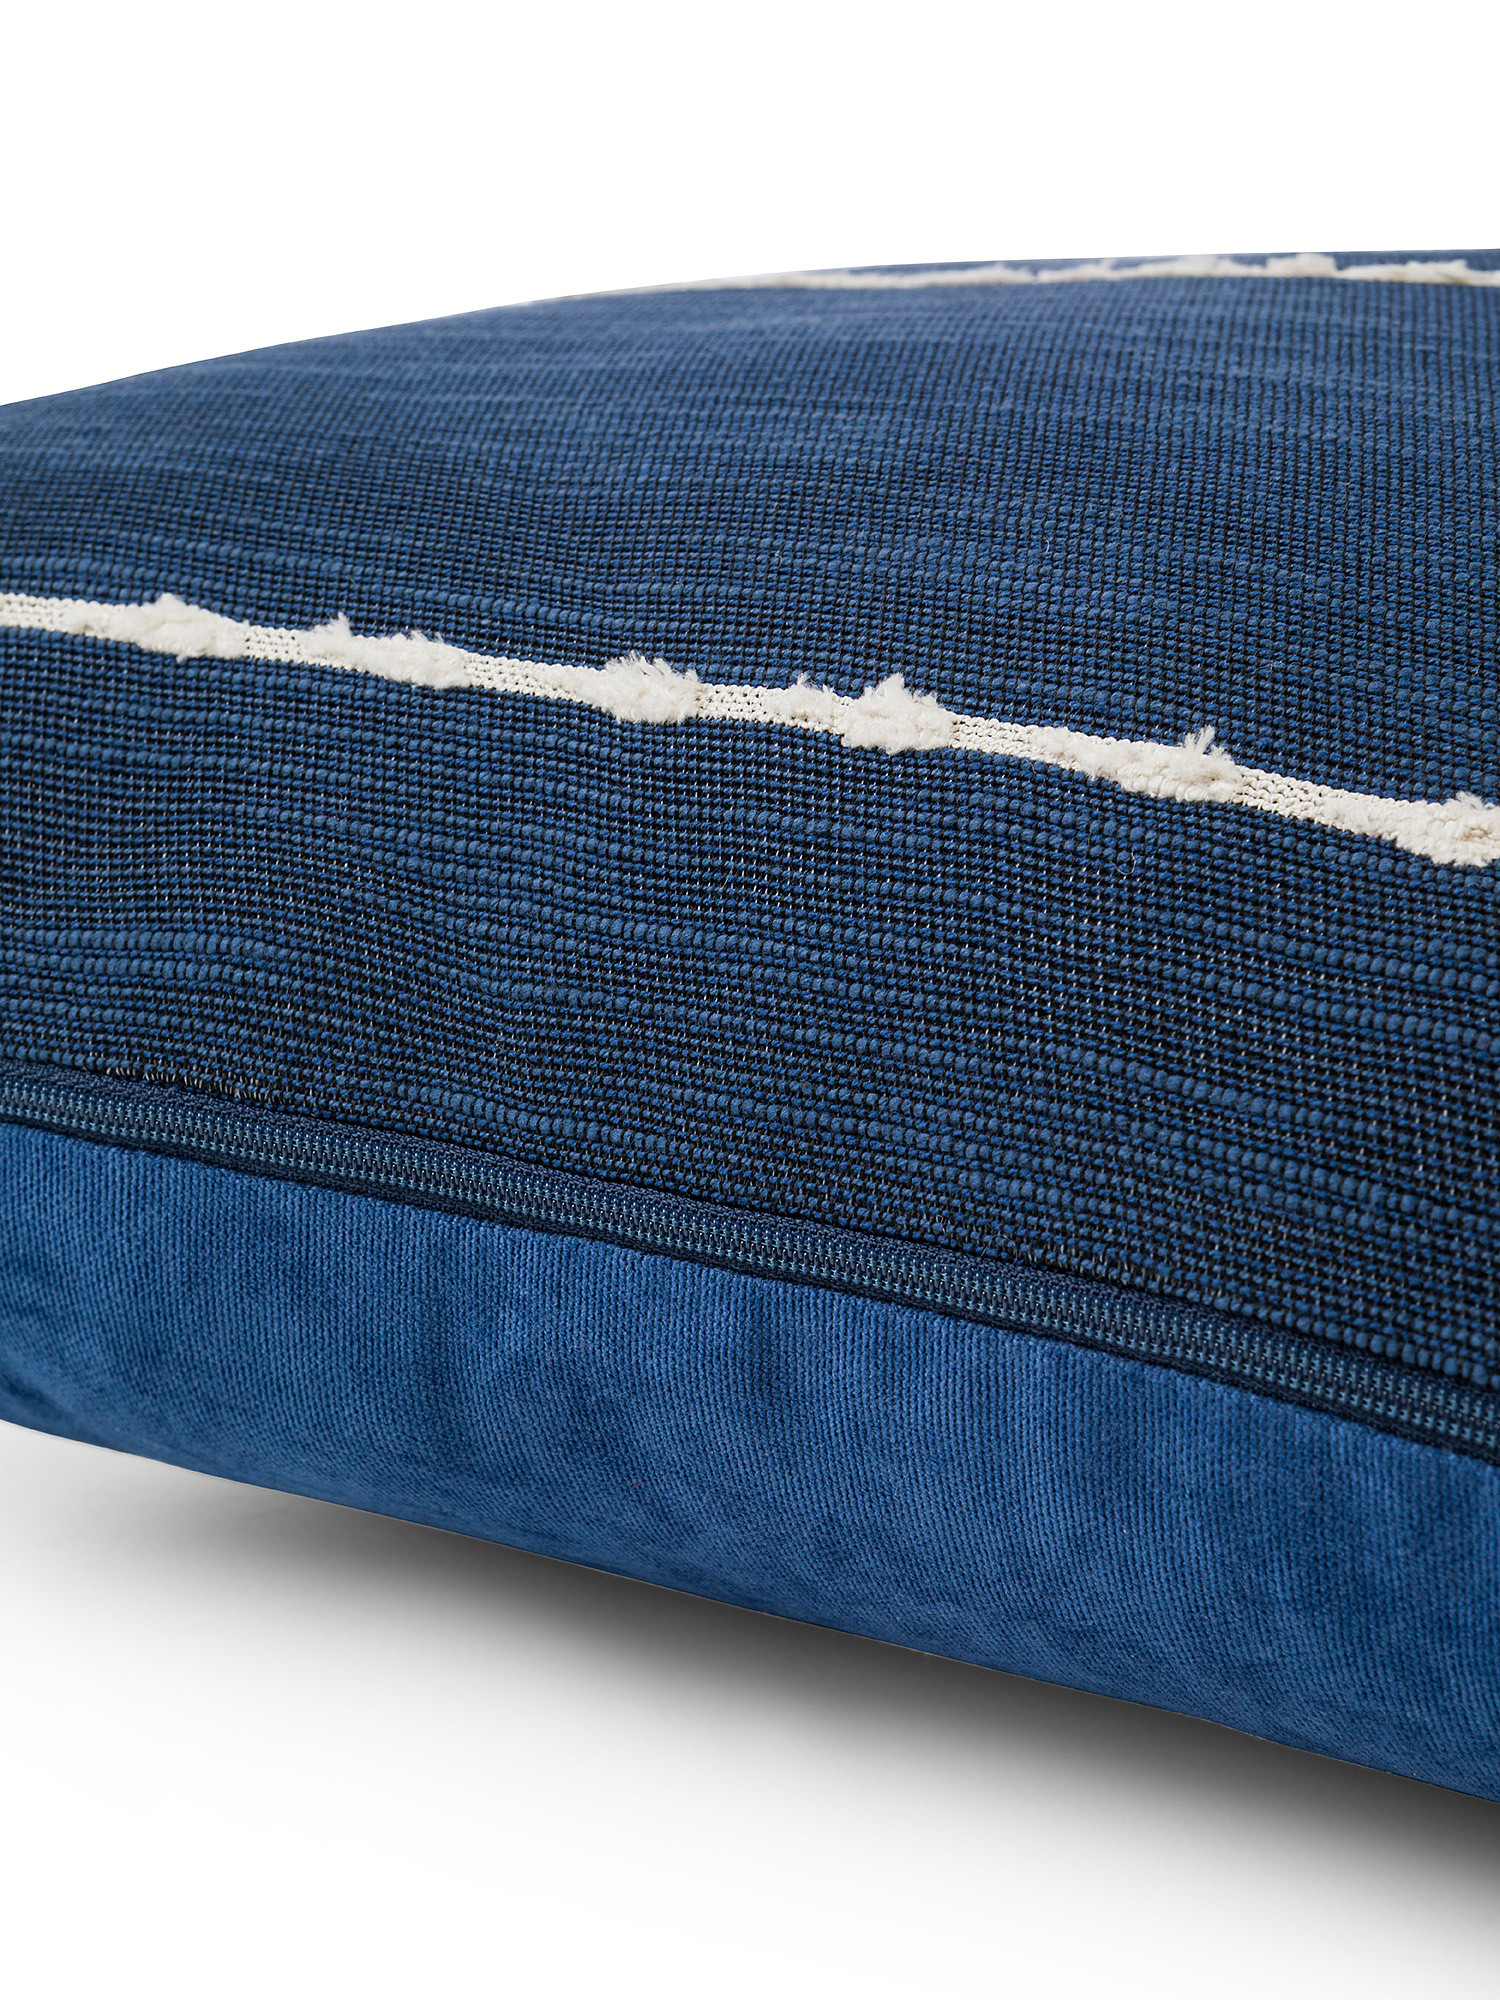 Cuscino tessuto motivo a righe 45x45cm, Blu, large image number 2